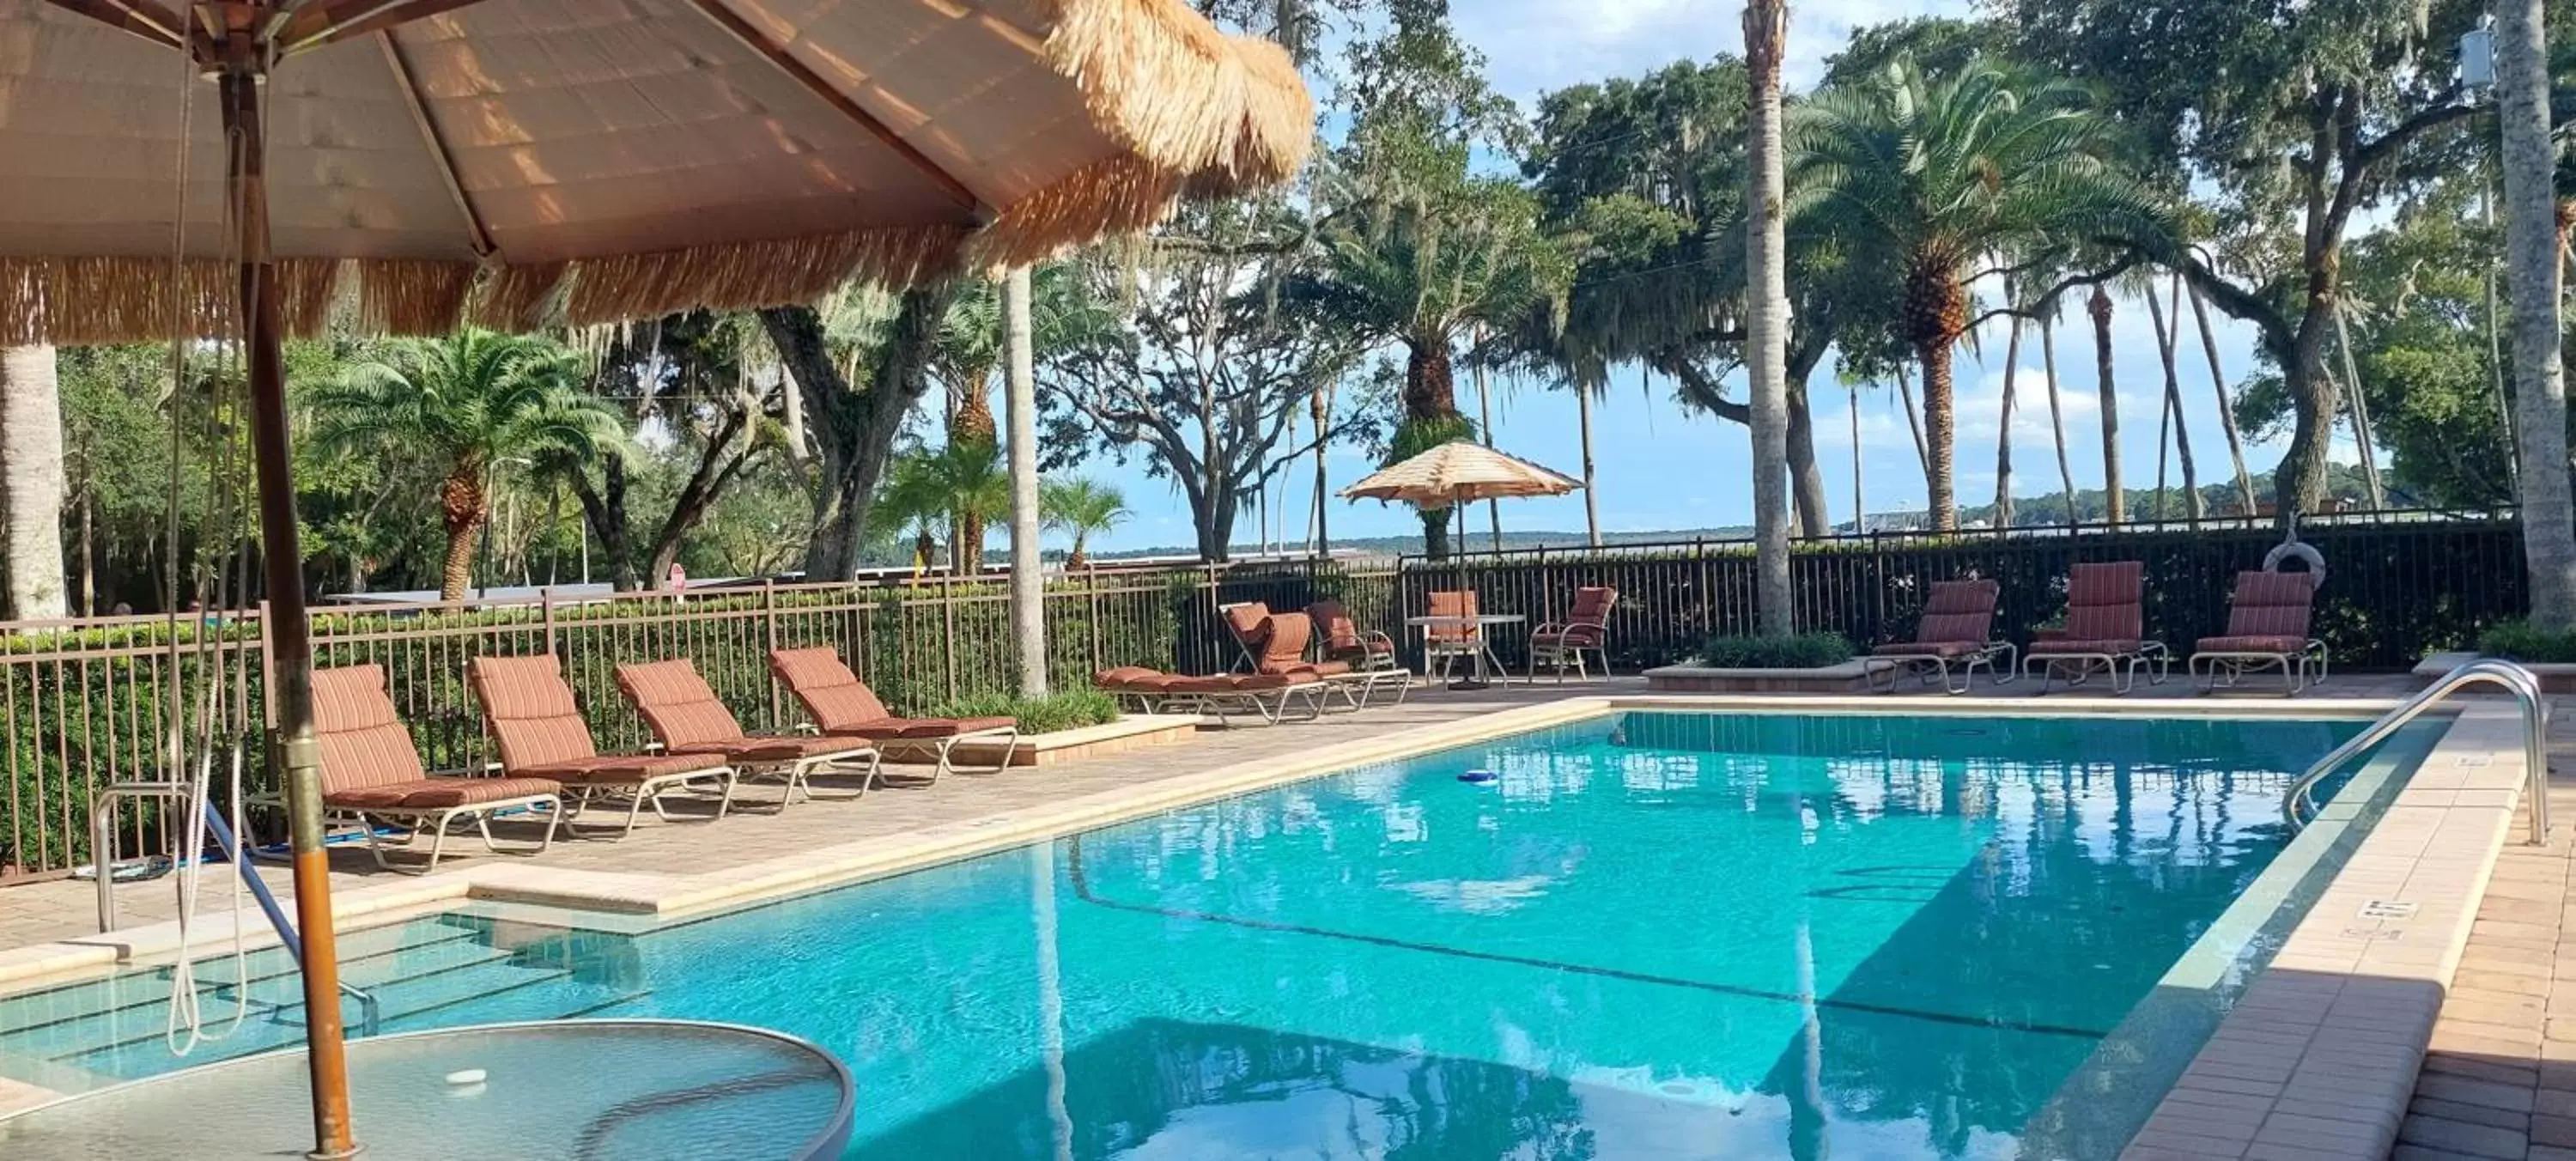 , Swimming Pool in Tropical Marina & Resort on Lake Beresford